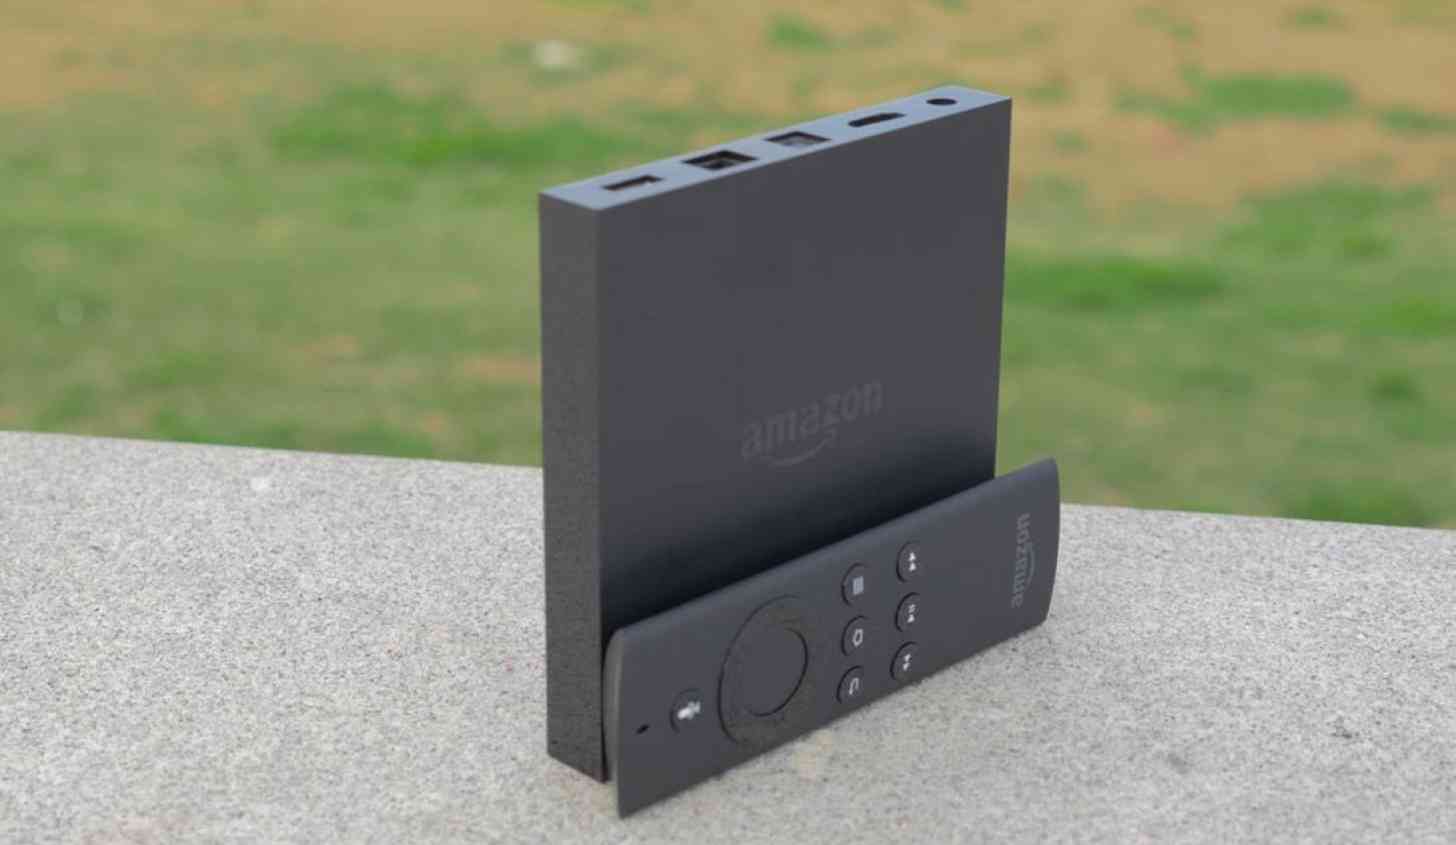 Amazon Fire TV set-top box and remote